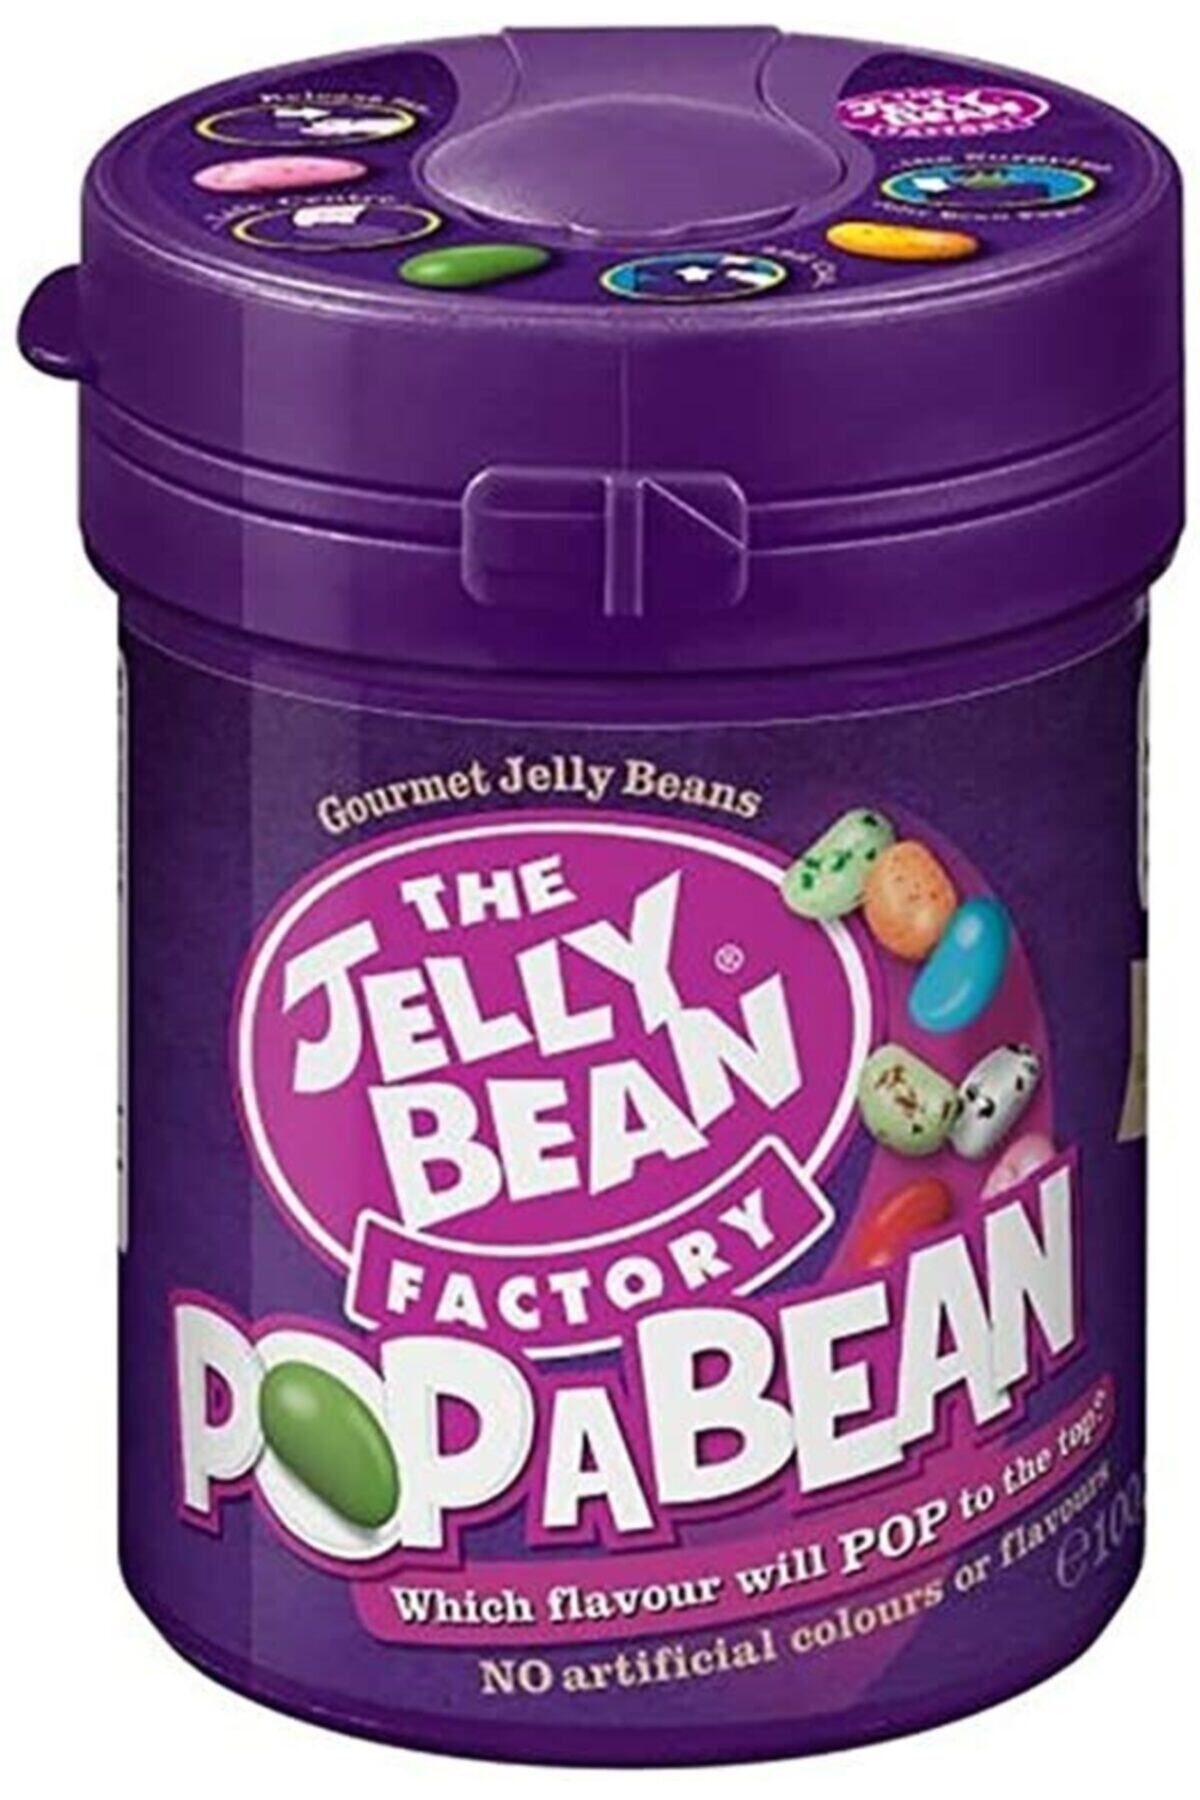 Jellybean brains